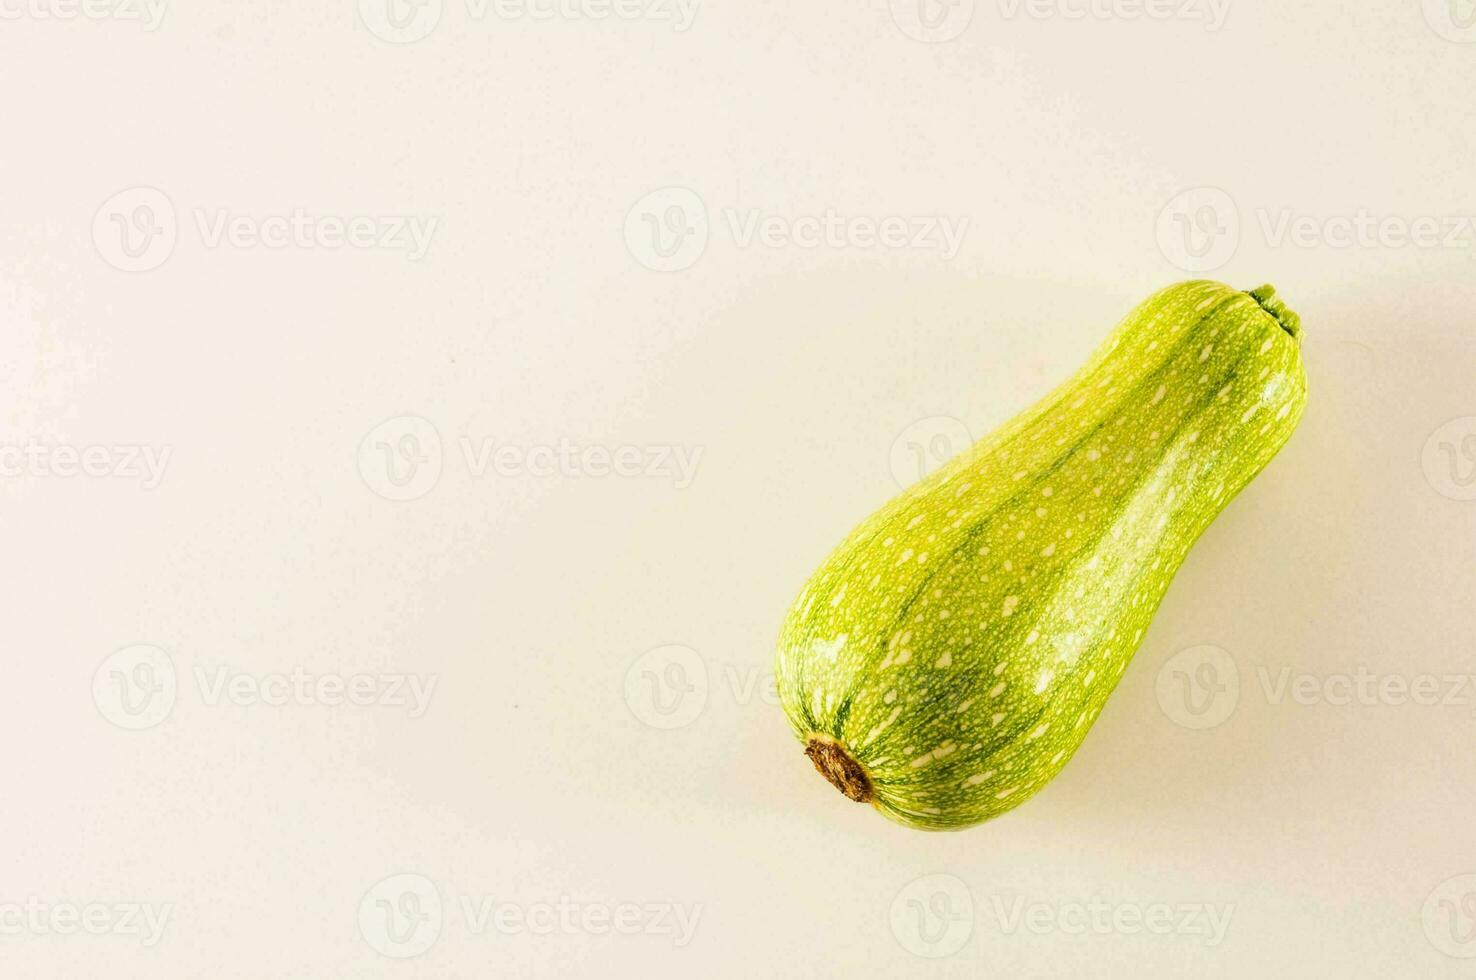 a single green squash on a white background photo